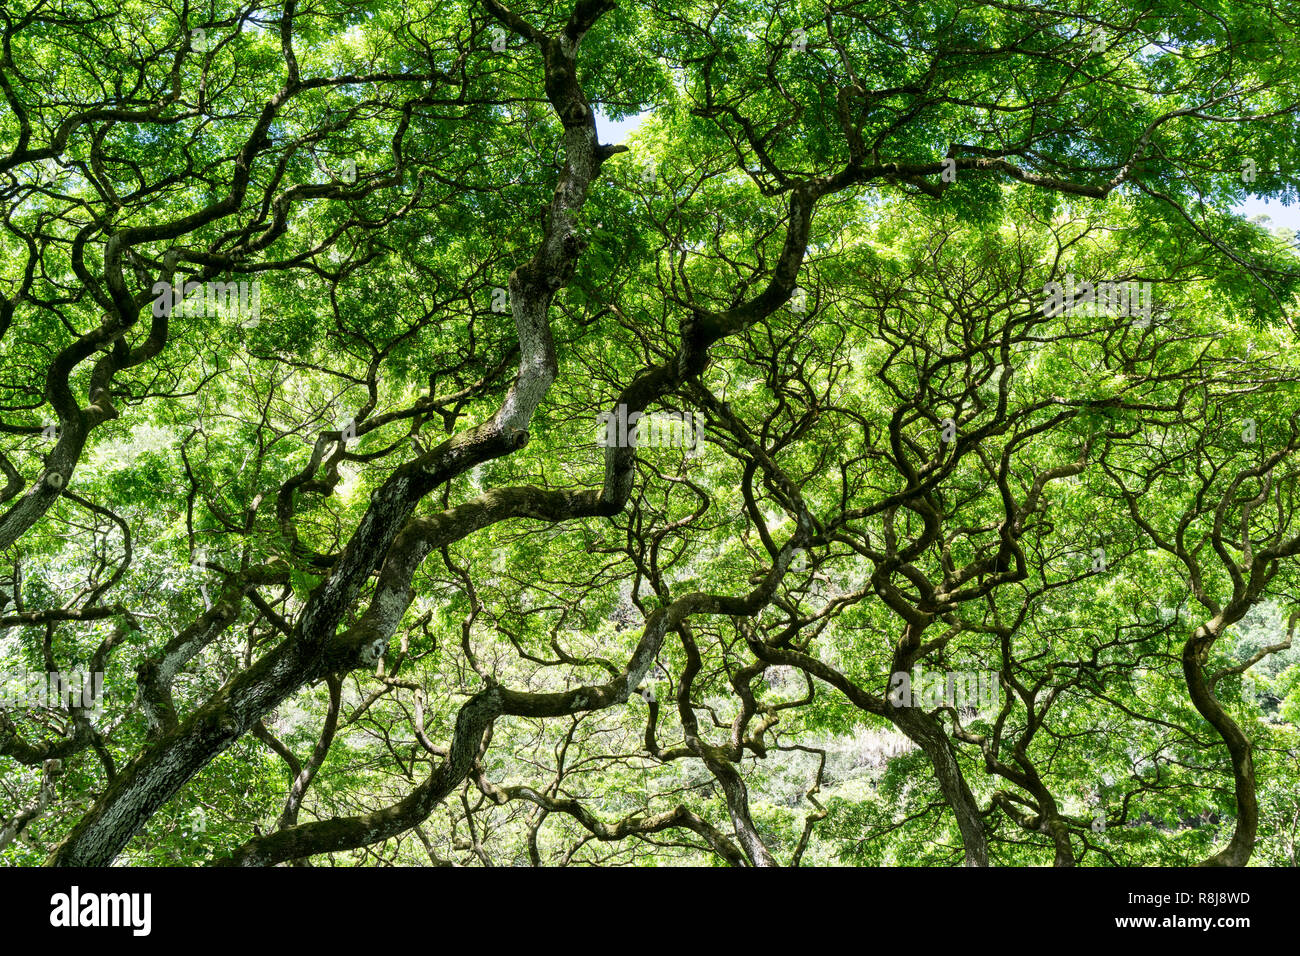 Grand arbre Monkeypod, branches et feuillage - Oahu, Hawaii Banque D'Images